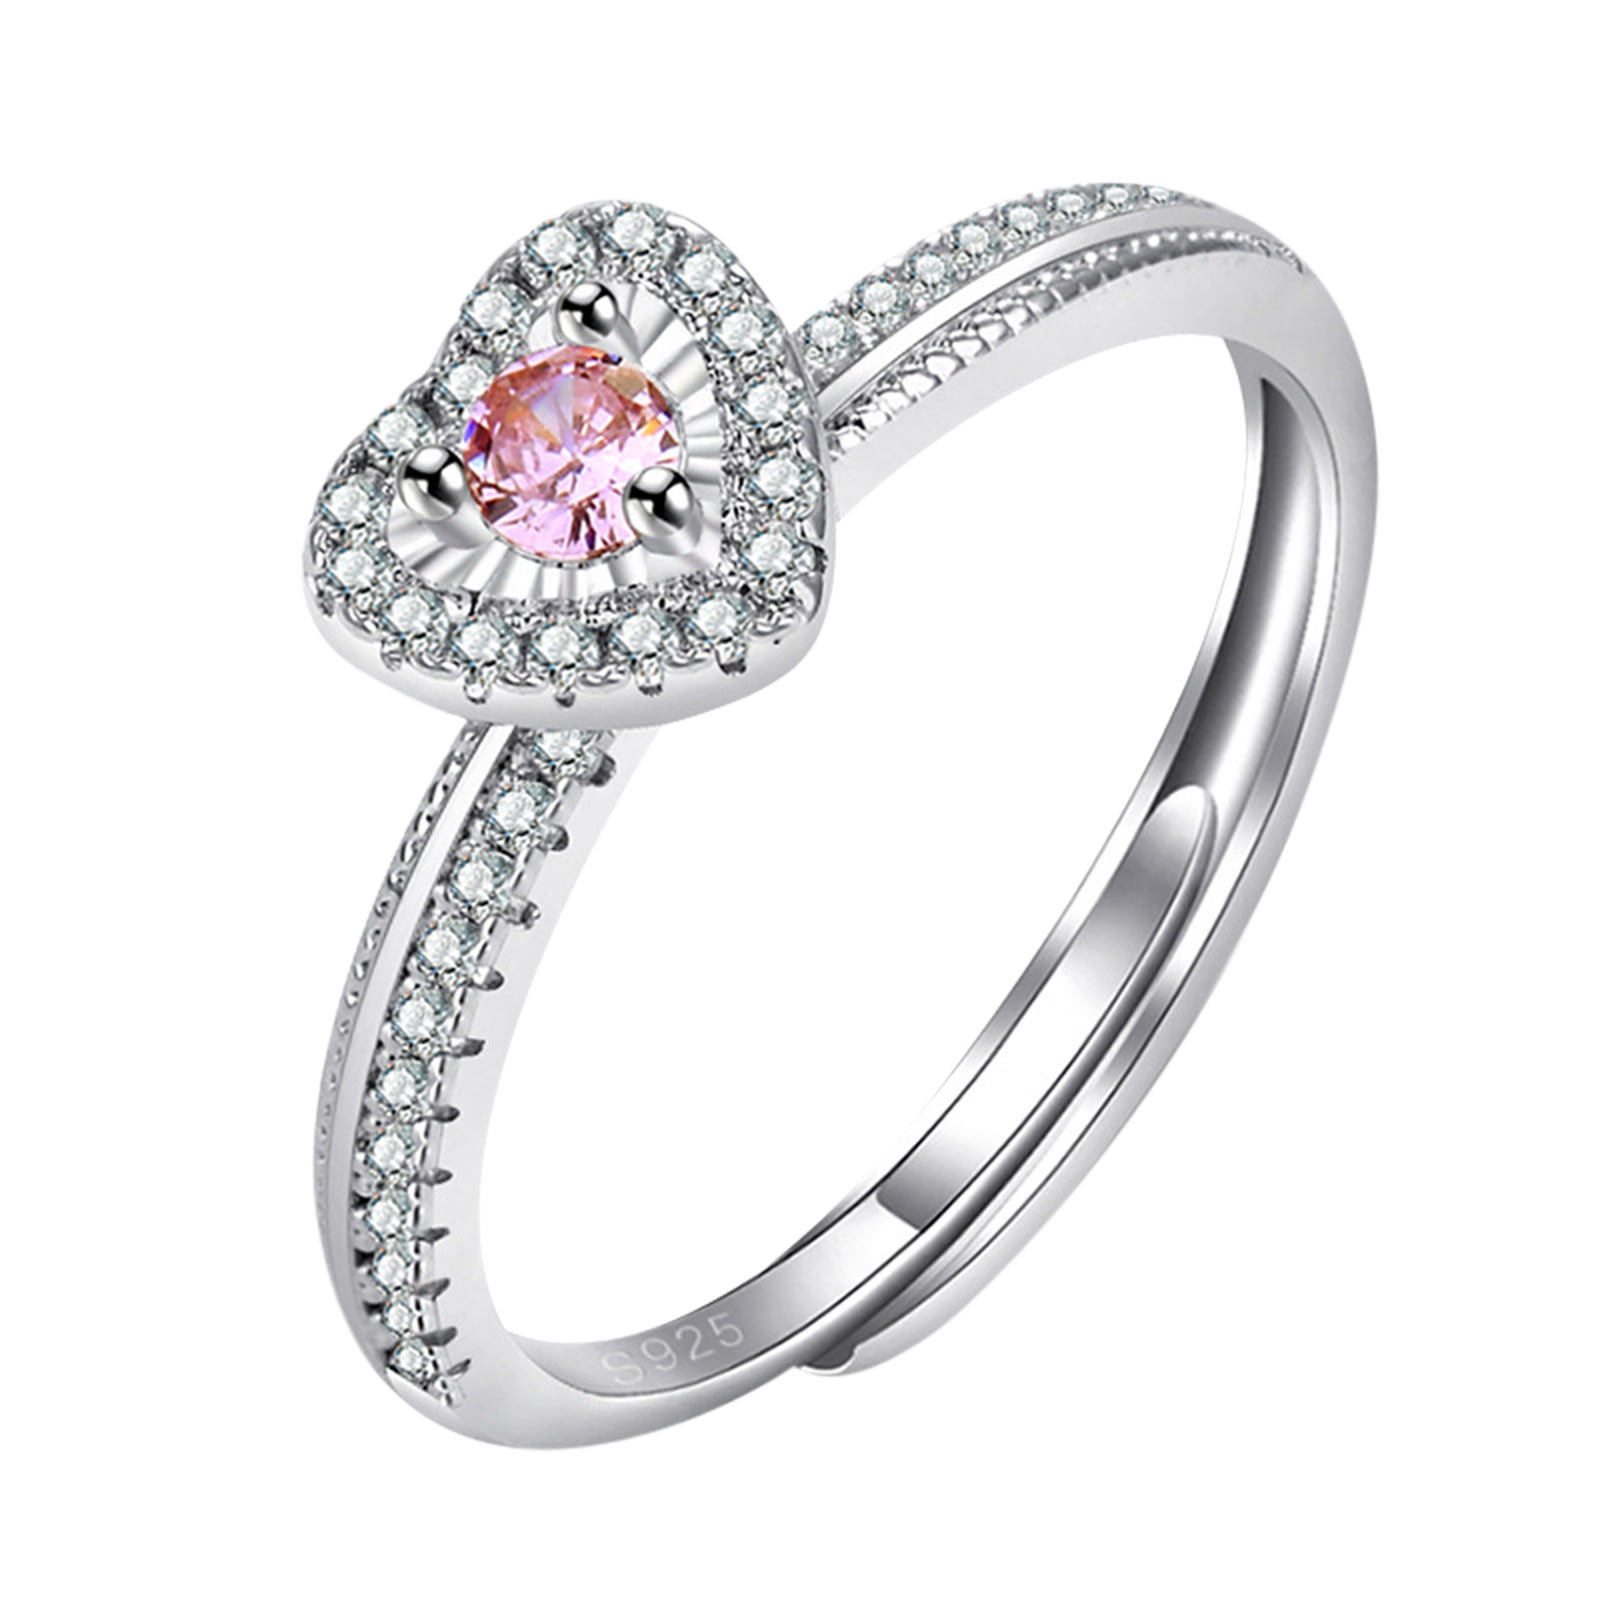 Heart Shaped Diamond ringheart shaped pink valentine ringVivid Pink Diamond Engagement Ringgift for girlfriendbirth day gift for lover.